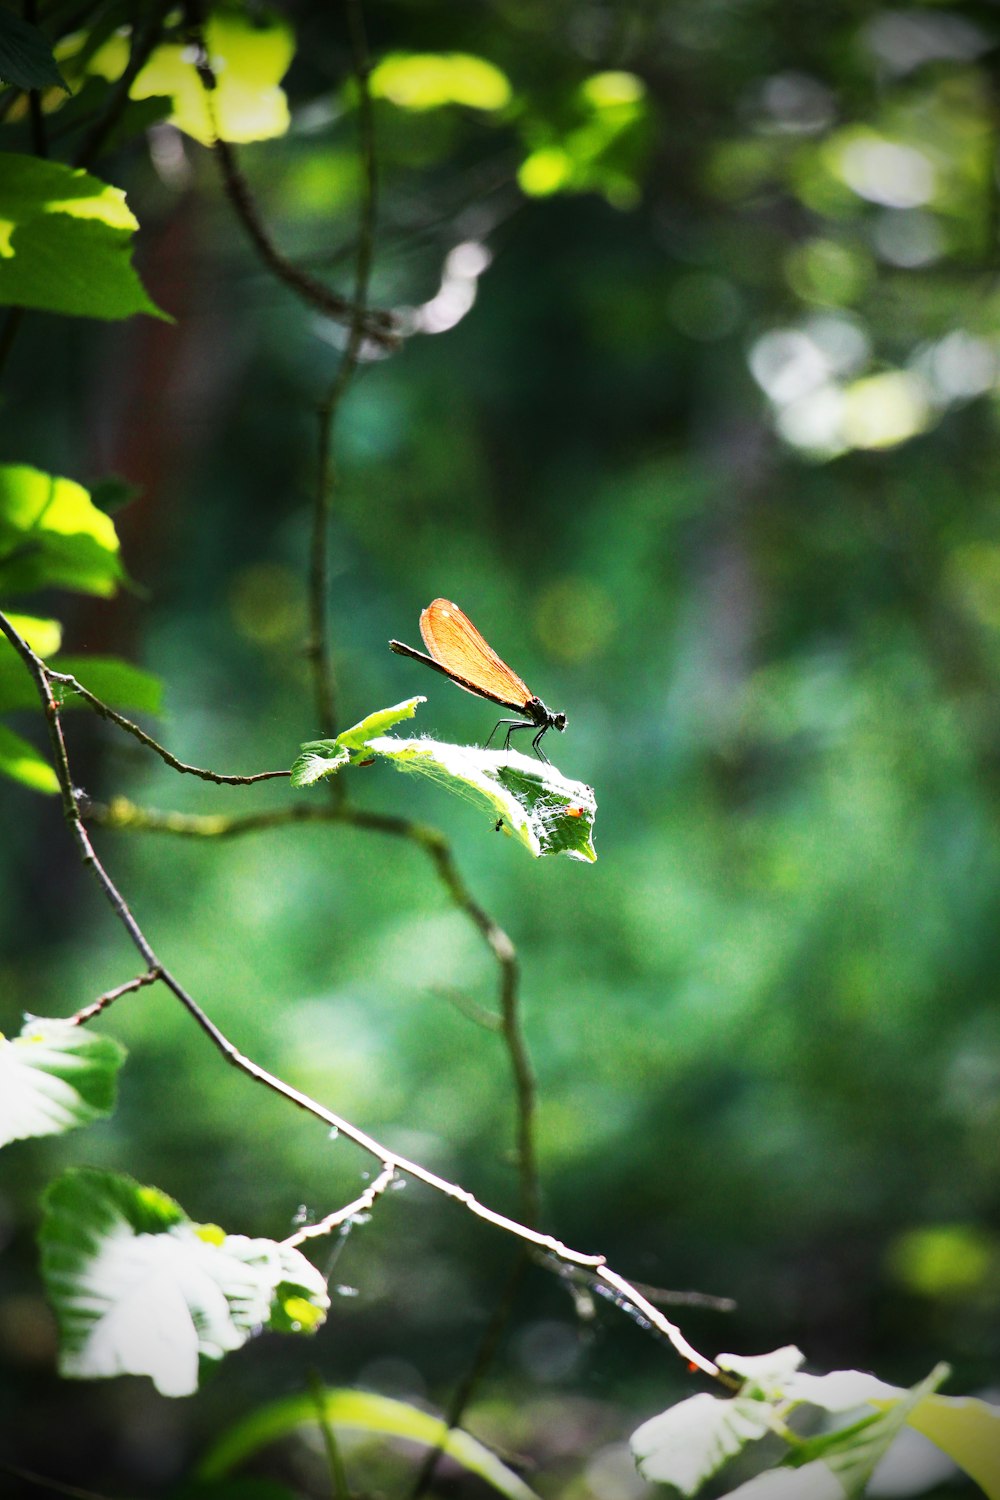 black and brown damselfly perching on green leaf